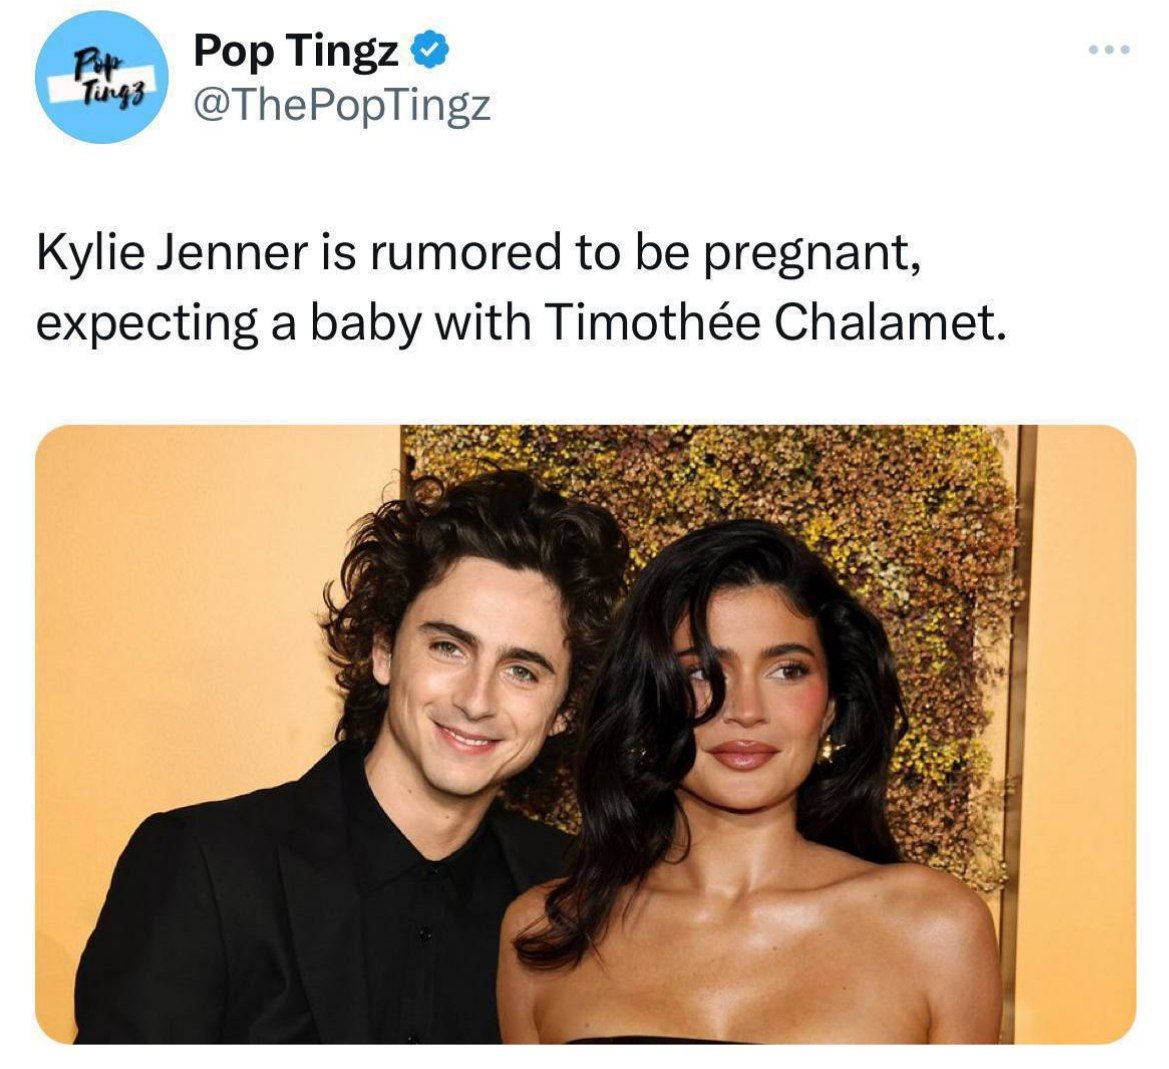 Selon les médias, #KylieJenner serait enceinte du bébé de #TimothéeChalamet.

#Dune #Kylie #KylieSkin #KylieCosmetics #KylieBaby #WonkaMovie #WillyWonka